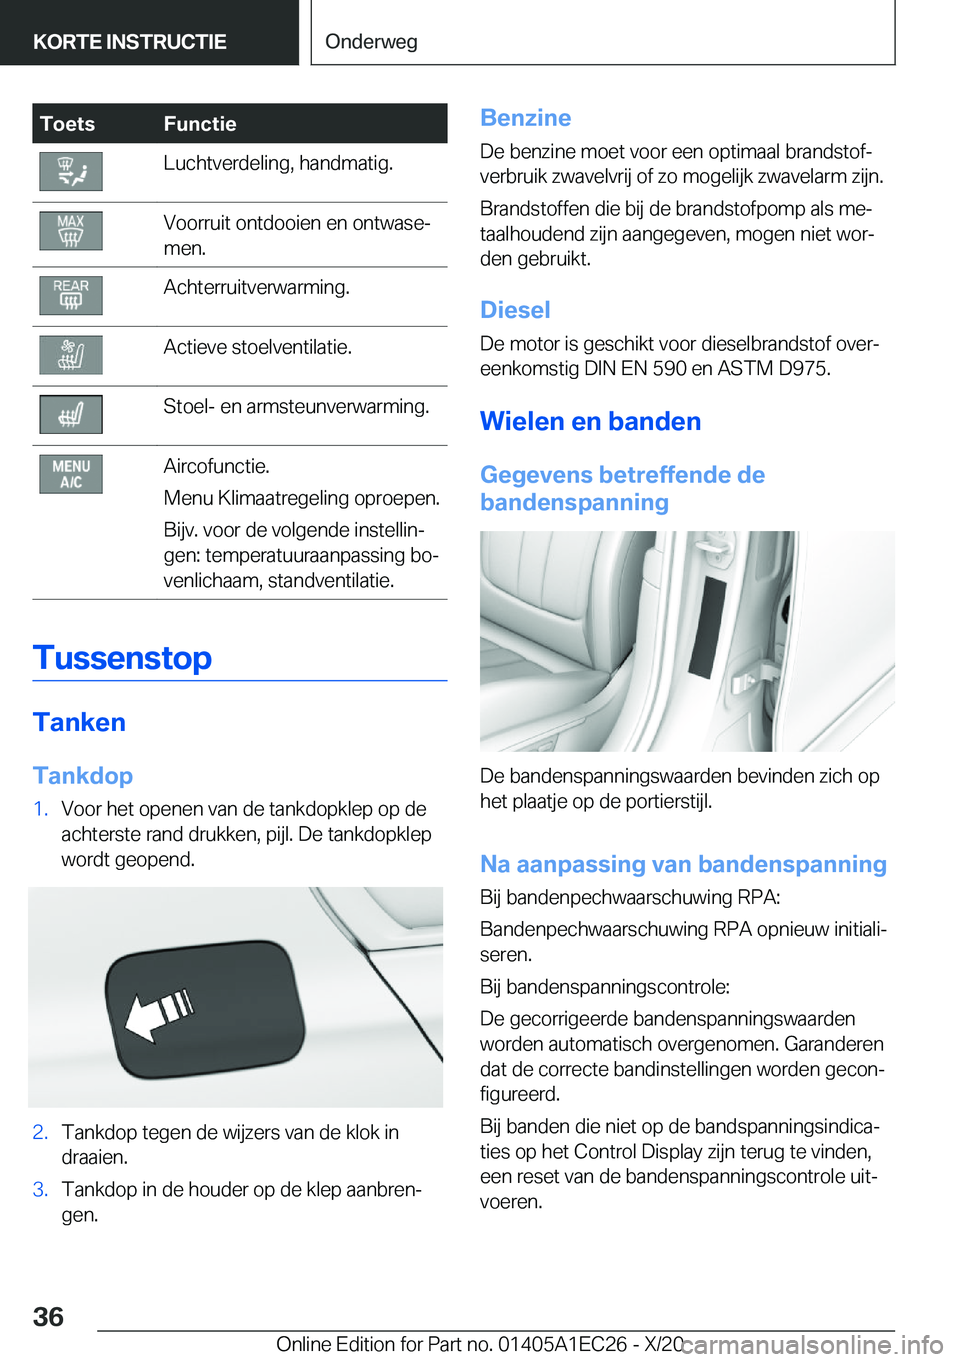 BMW 8 SERIES GRAN COUPE 2021  Instructieboekjes (in Dutch) �T�o�e�t�s�F�u�n�c�t�i�e�L�u�c�h�t�v�e�r�d�e�l�i�n�g�,��h�a�n�d�m�a�t�i�g�.�V�o�o�r�r�u�i�t��o�n�t�d�o�o�i�e�n��e�n��o�n�t�w�a�s�ej
�m�e�n�.�A�c�h�t�e�r�r�u�i�t�v�e�r�w�a�r�m�i�n�g�.�A�c�t�i�e�v�